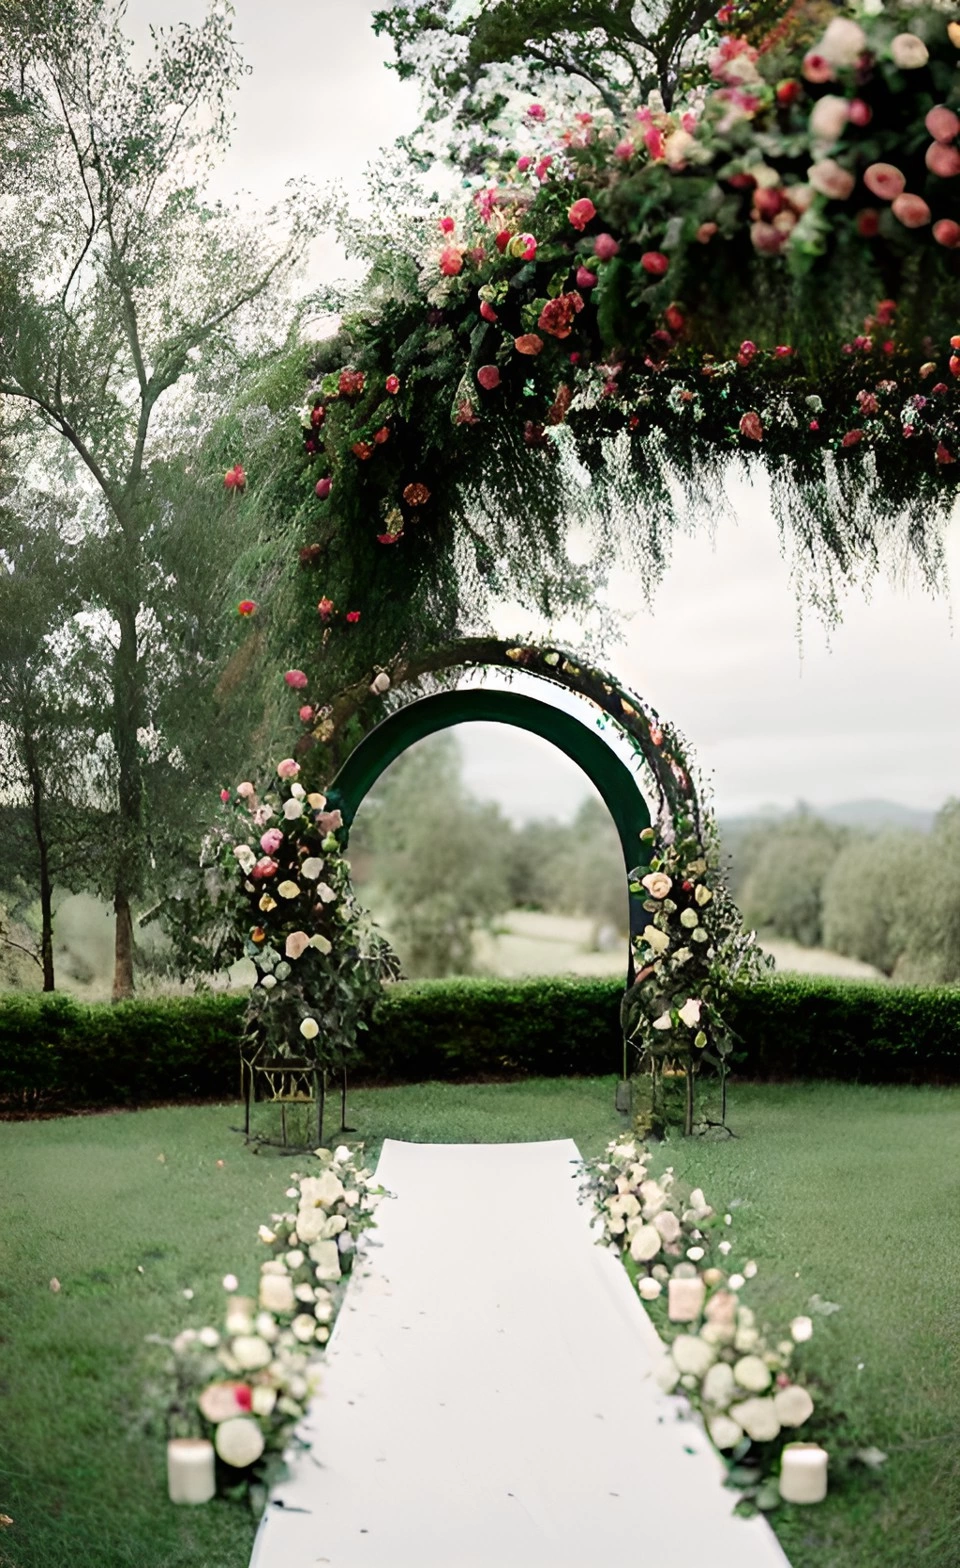 Свадебная арка в эко стиле 2